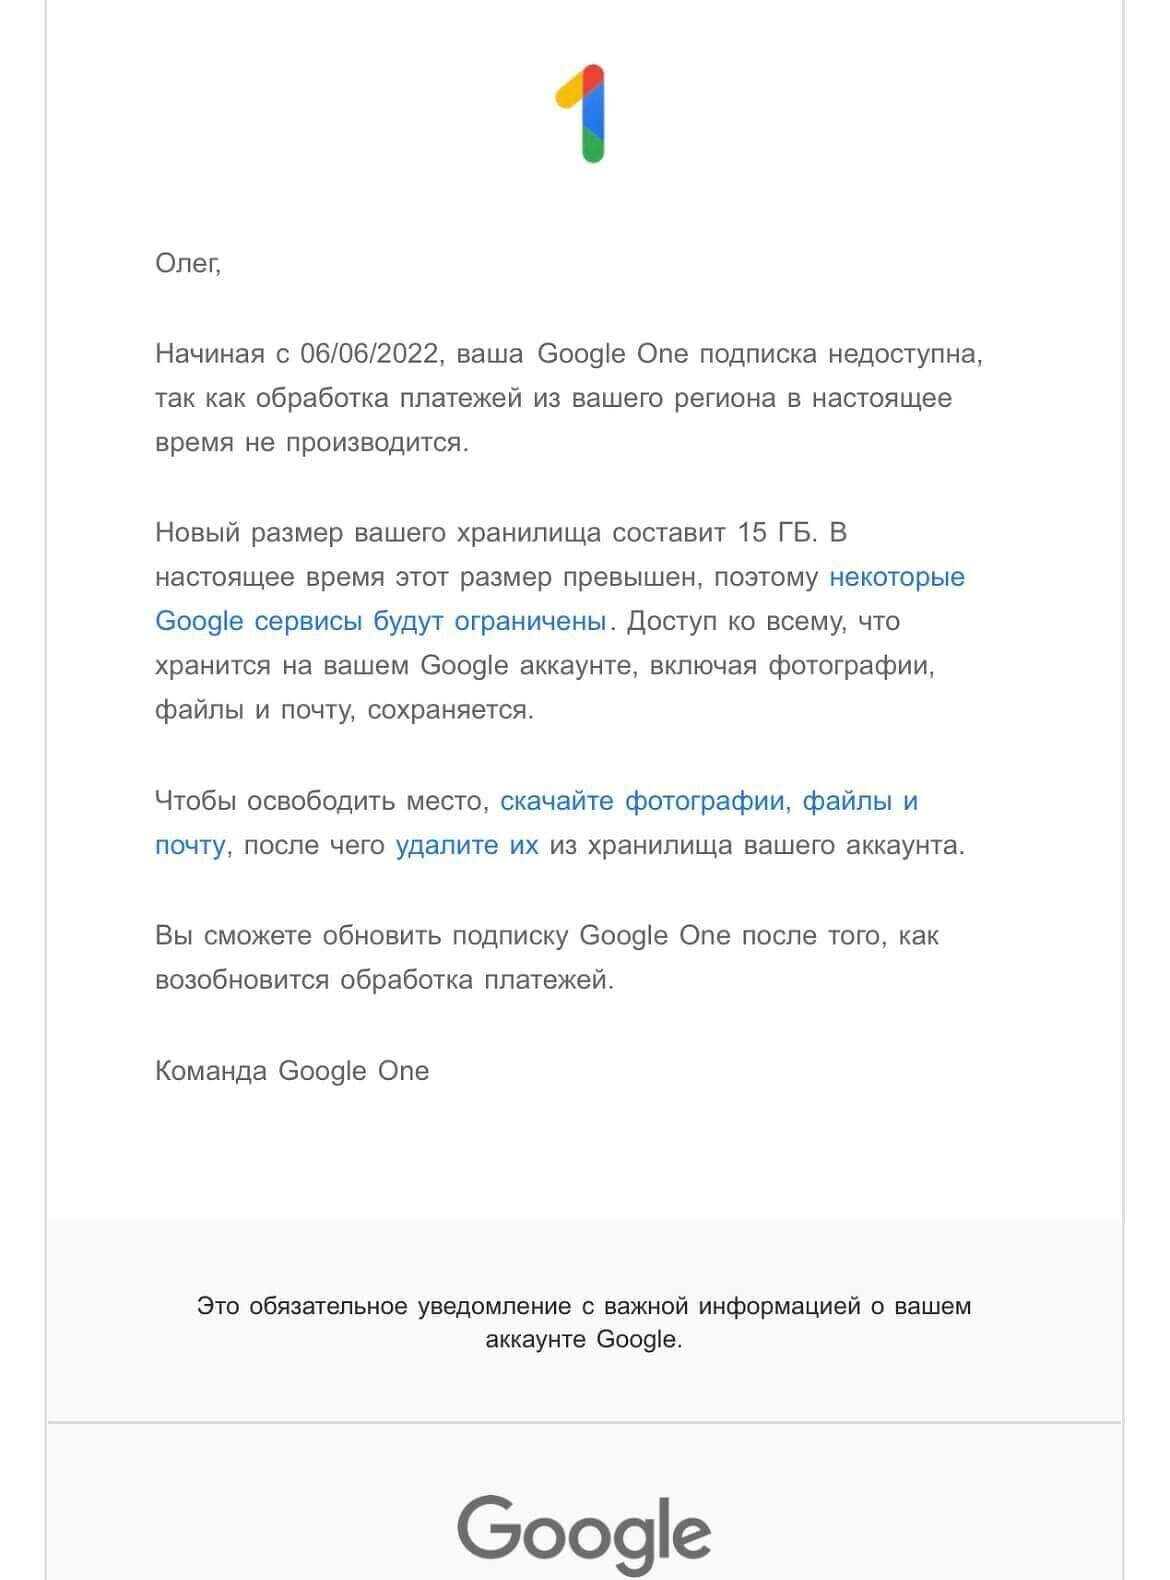 Google One ban